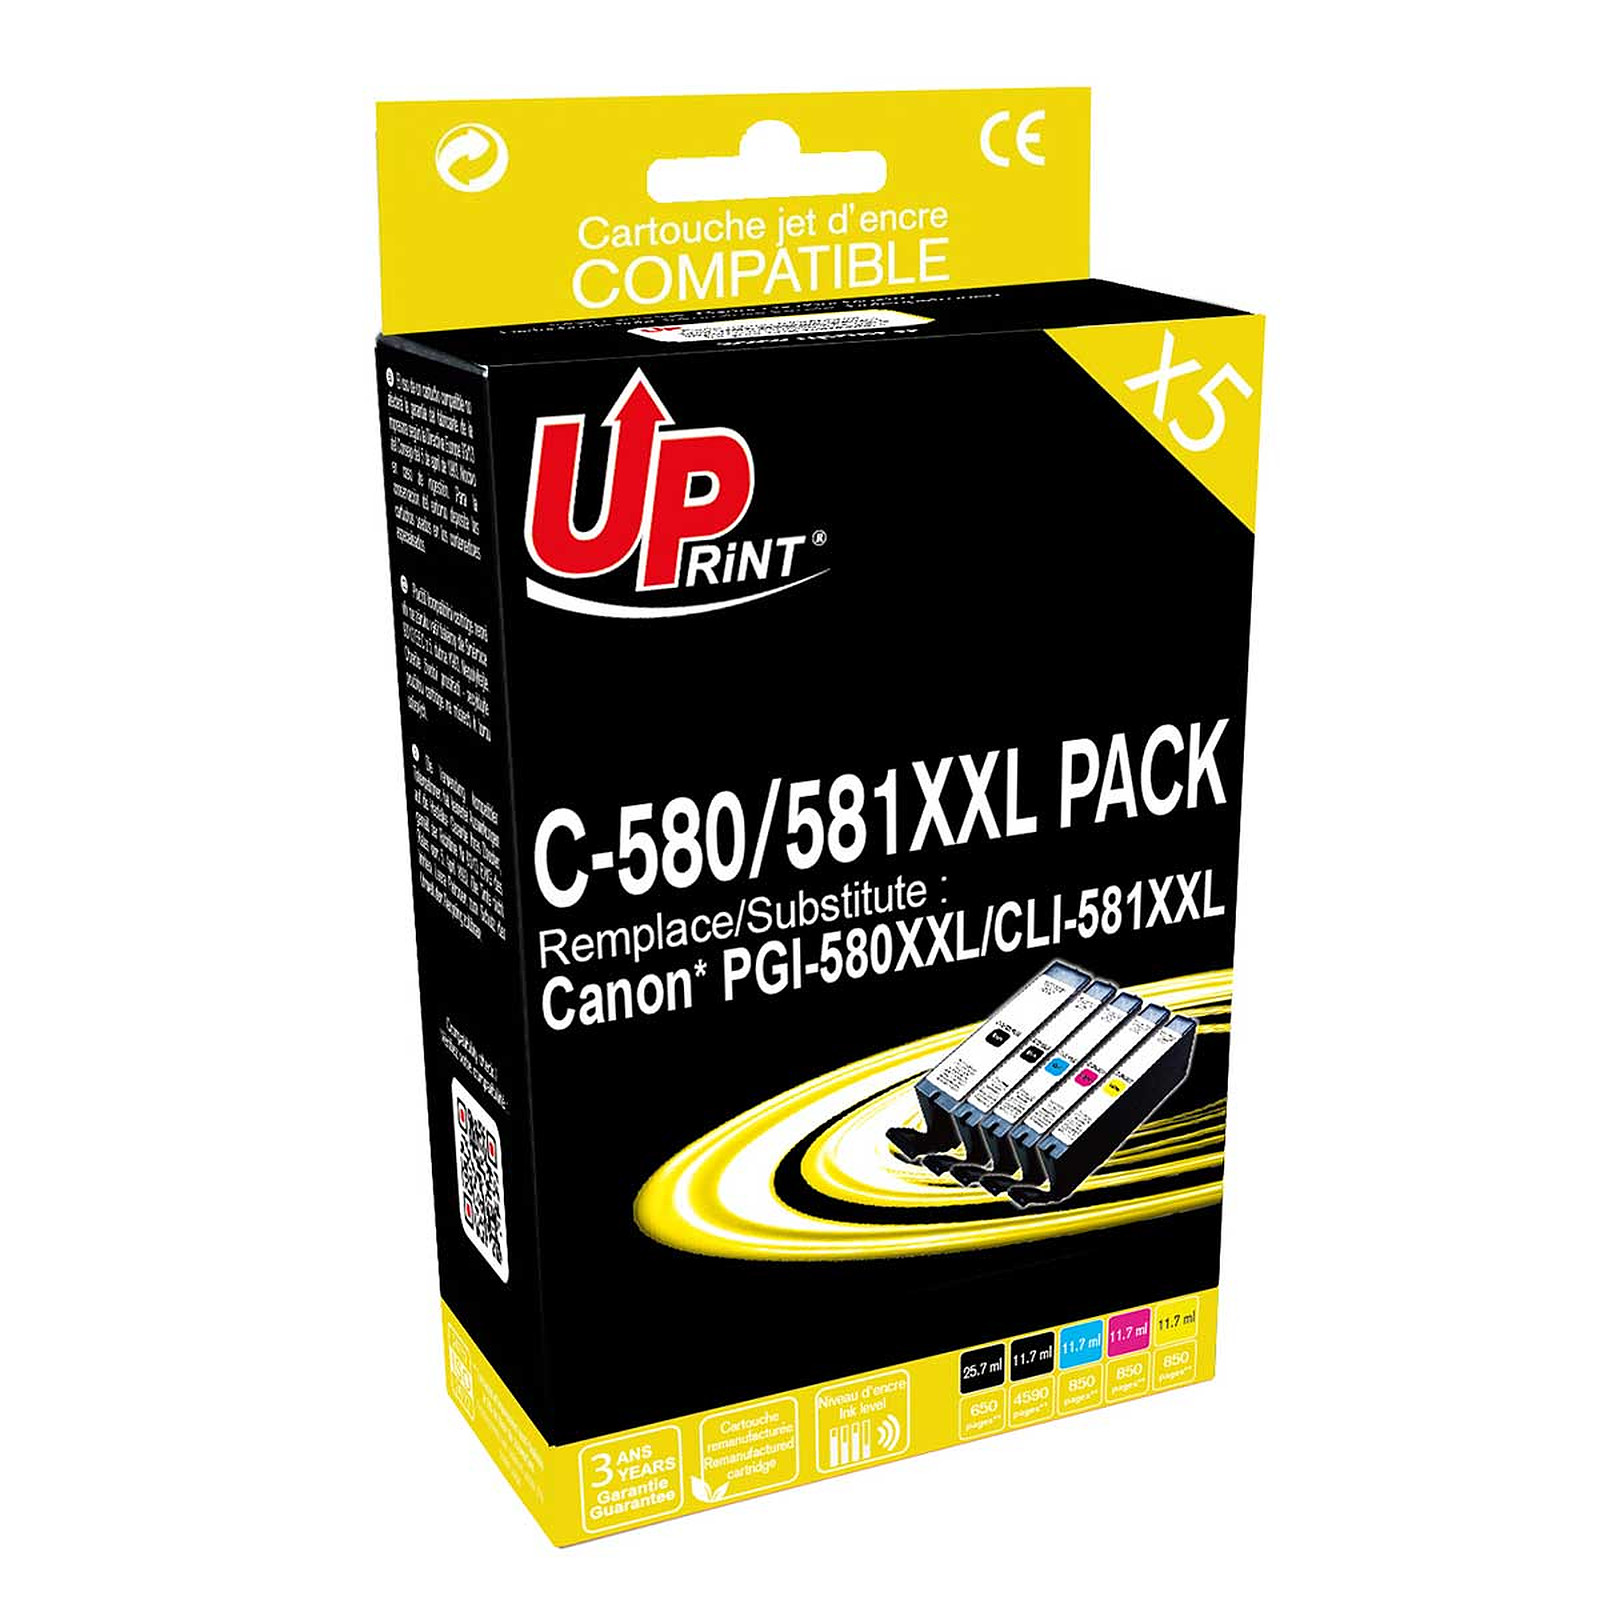 UPrint C-580/581XXL Pack - Cartouche imprimante UPrint